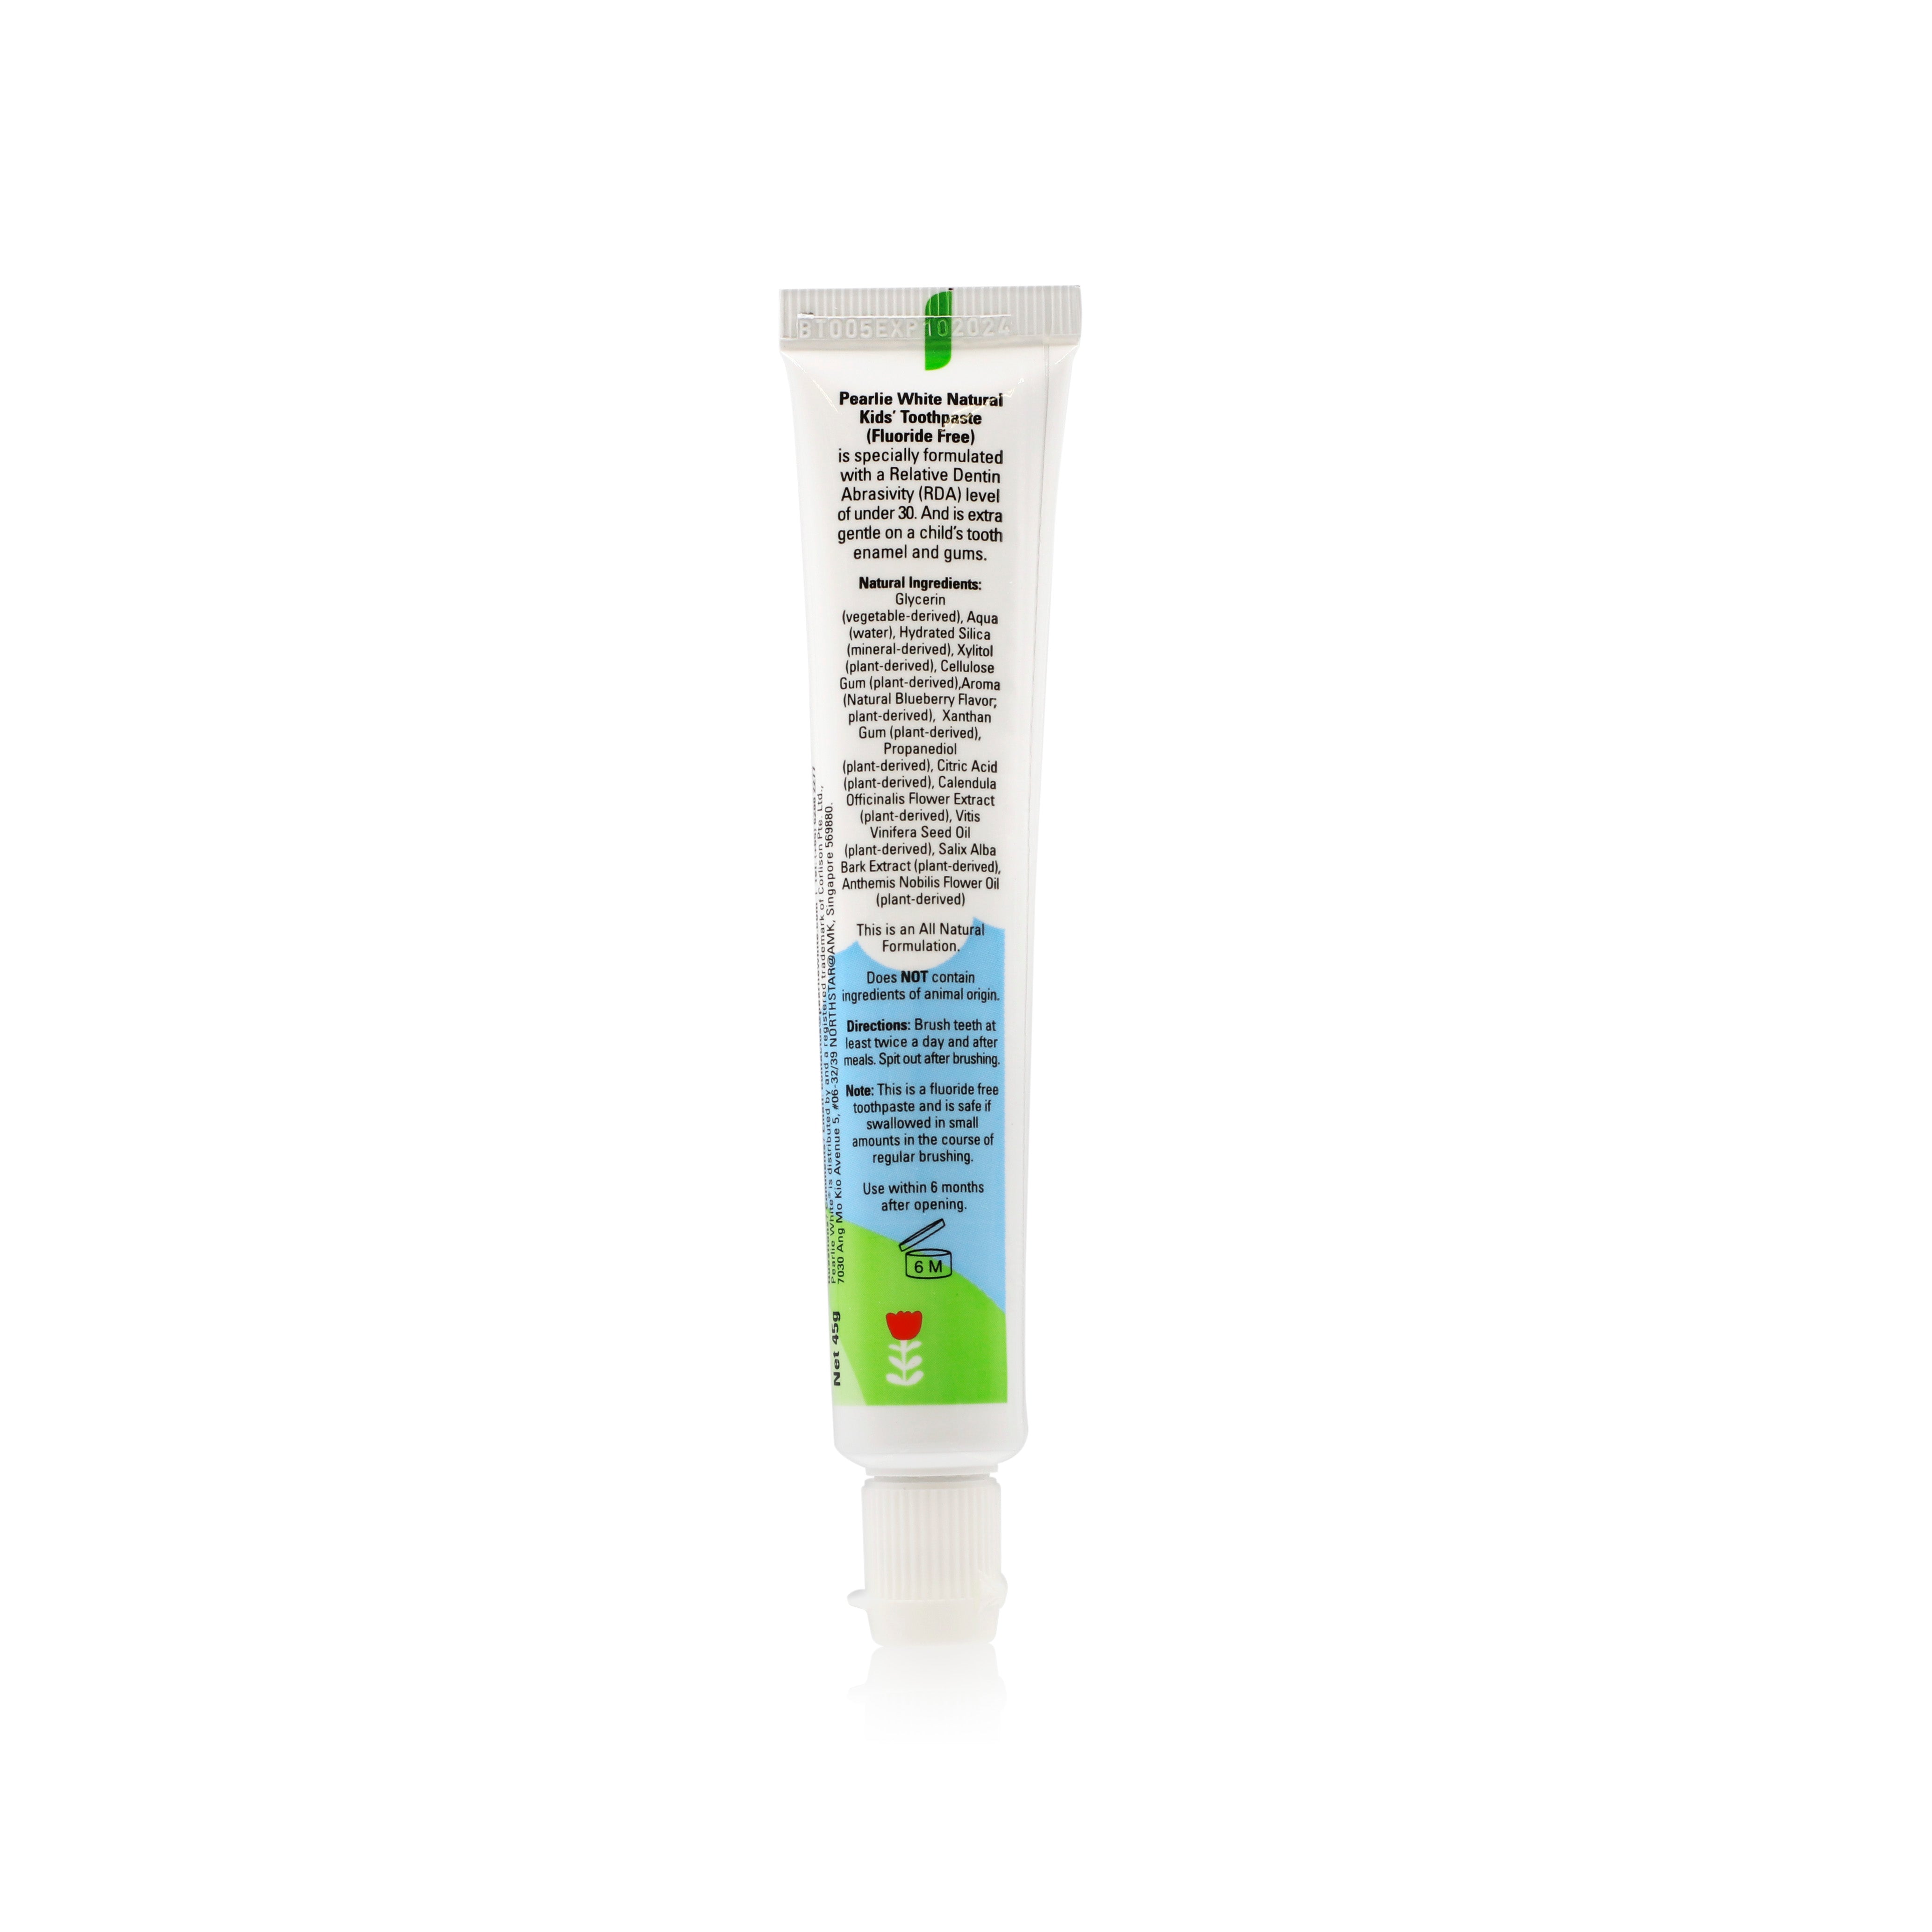 All Natural Enamel Safe Kids’ Toothpaste (Blueberry) 45g- Triple Pack